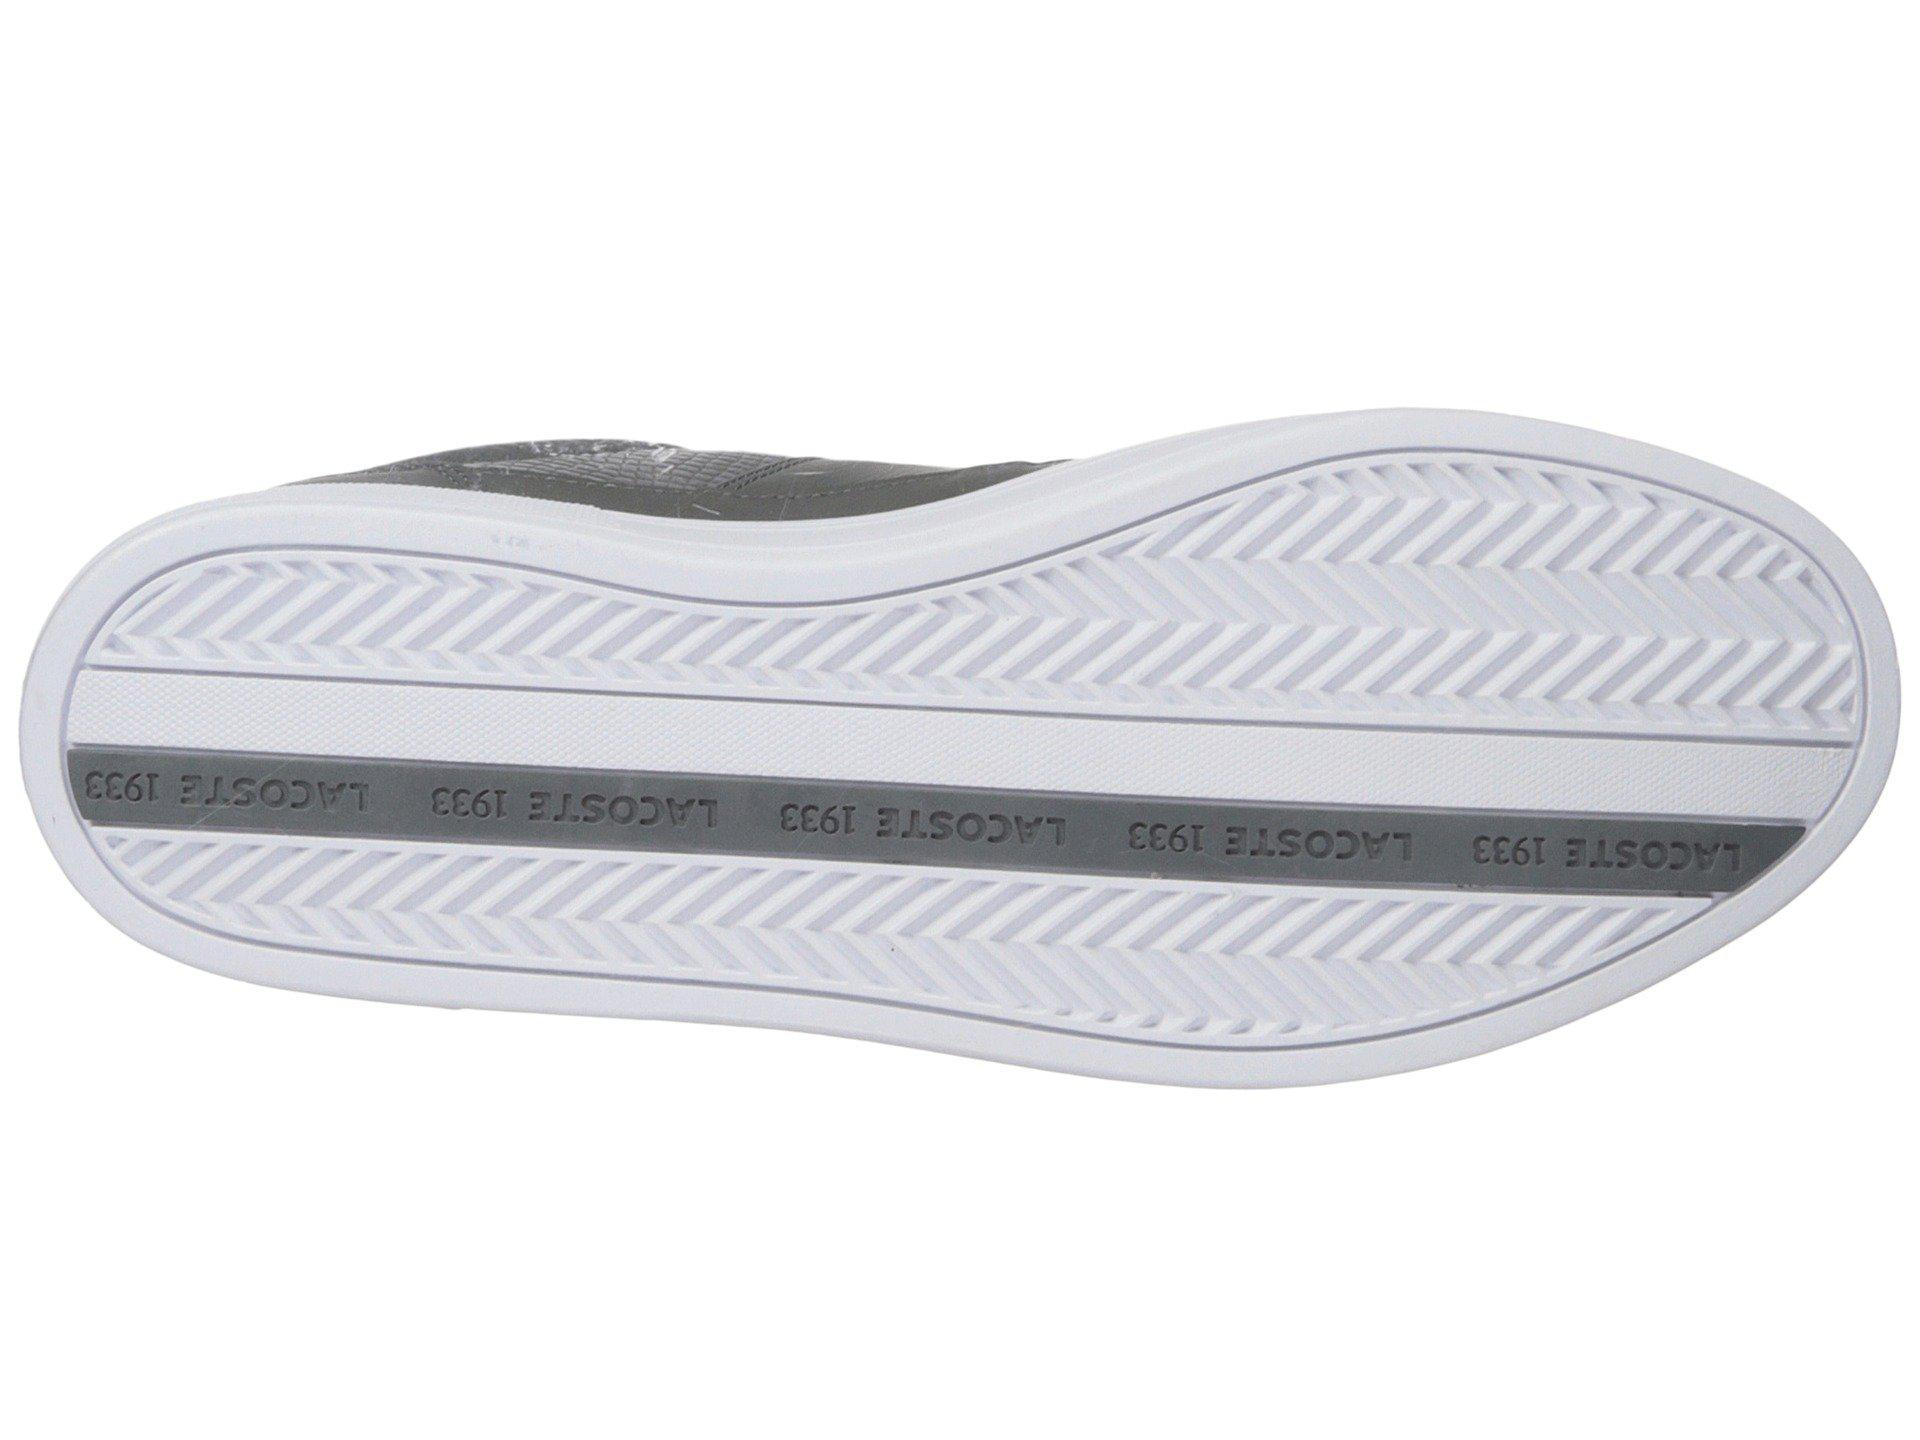 Lacoste Synthetic Europa 417 1 Sport (white) Men's Shoes Dark Grey (Gray) for Men - Lyst